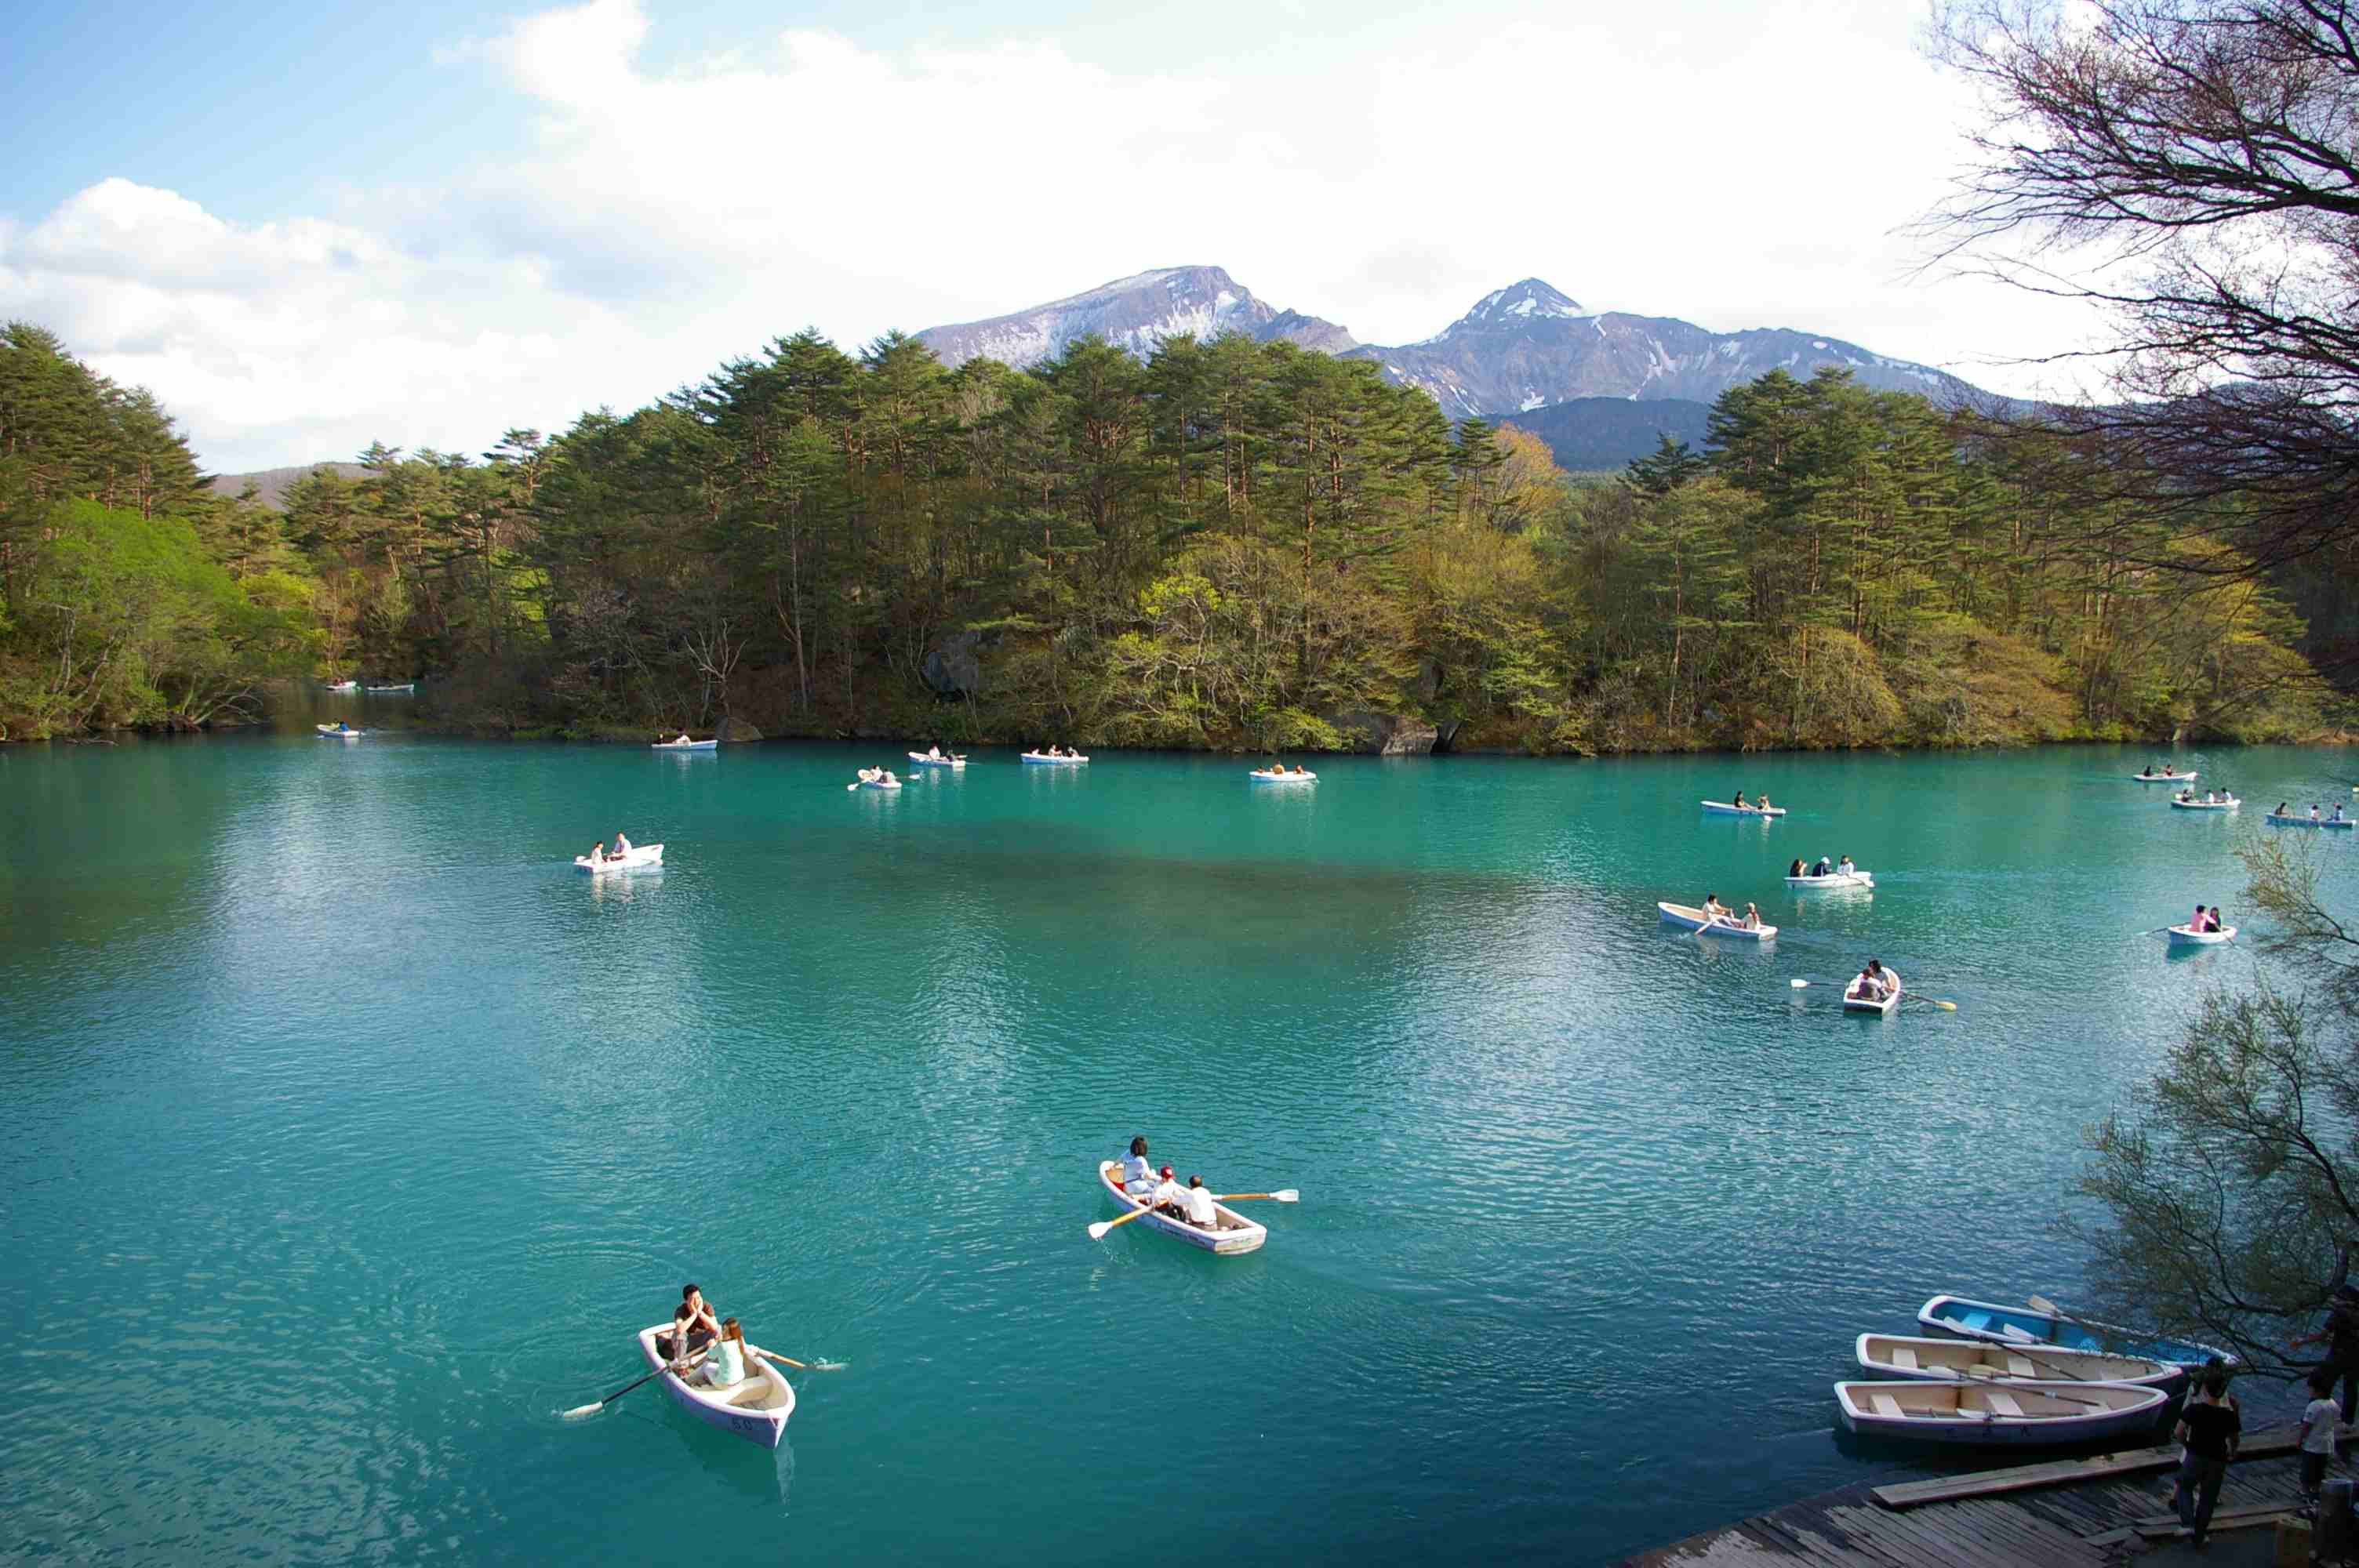 Goshiki-numa - A cluster of five volcano lakes